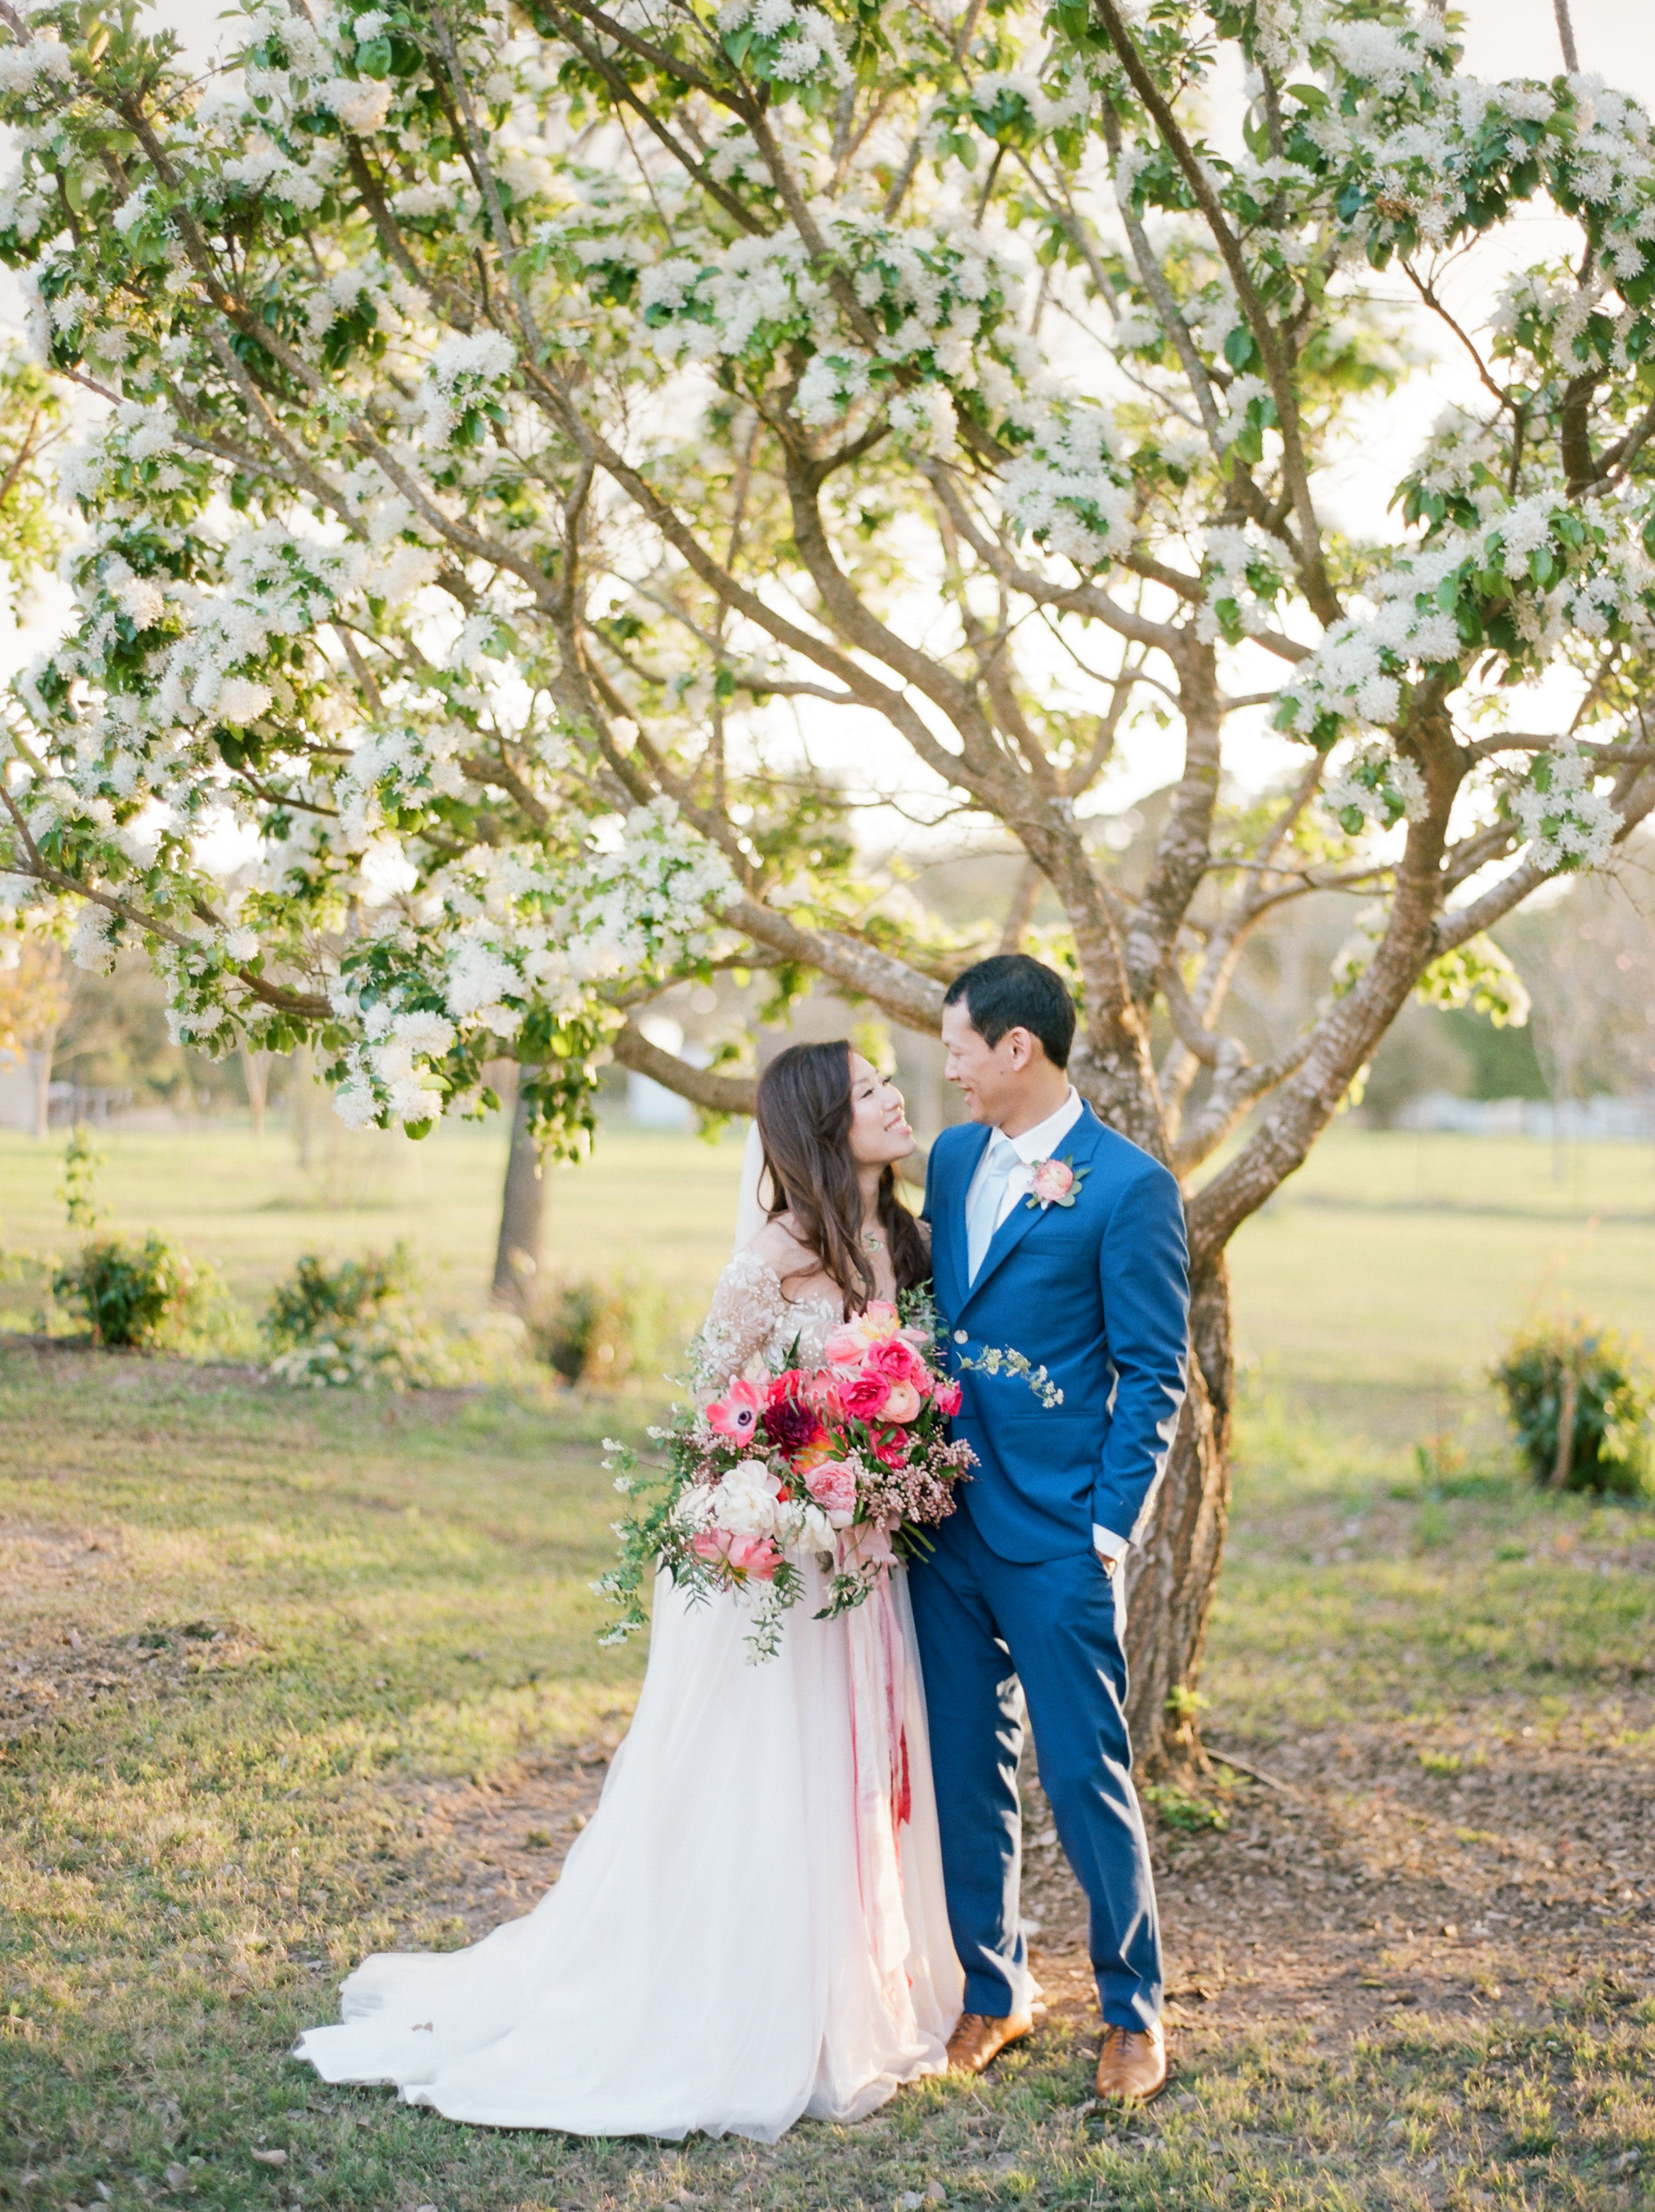 The-Knot-50-Weddings-50-States-Texas-Winner-Dana-Fernandez-photography-houston-wedding-photographer-film-fine-art-destination-1.jpg